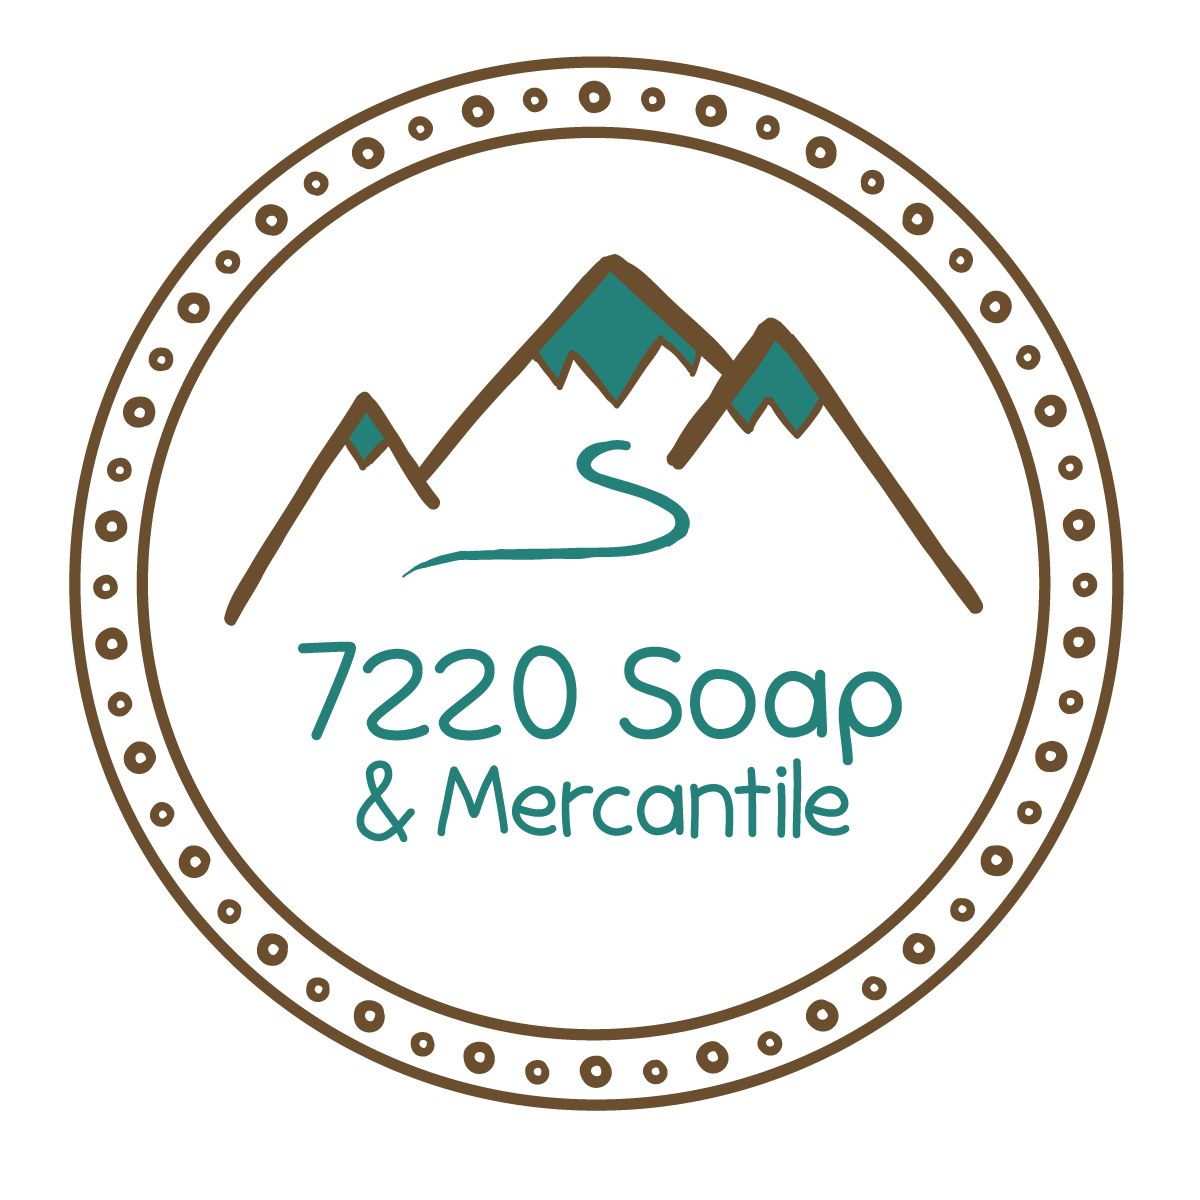 7220 Soap & Mercantile